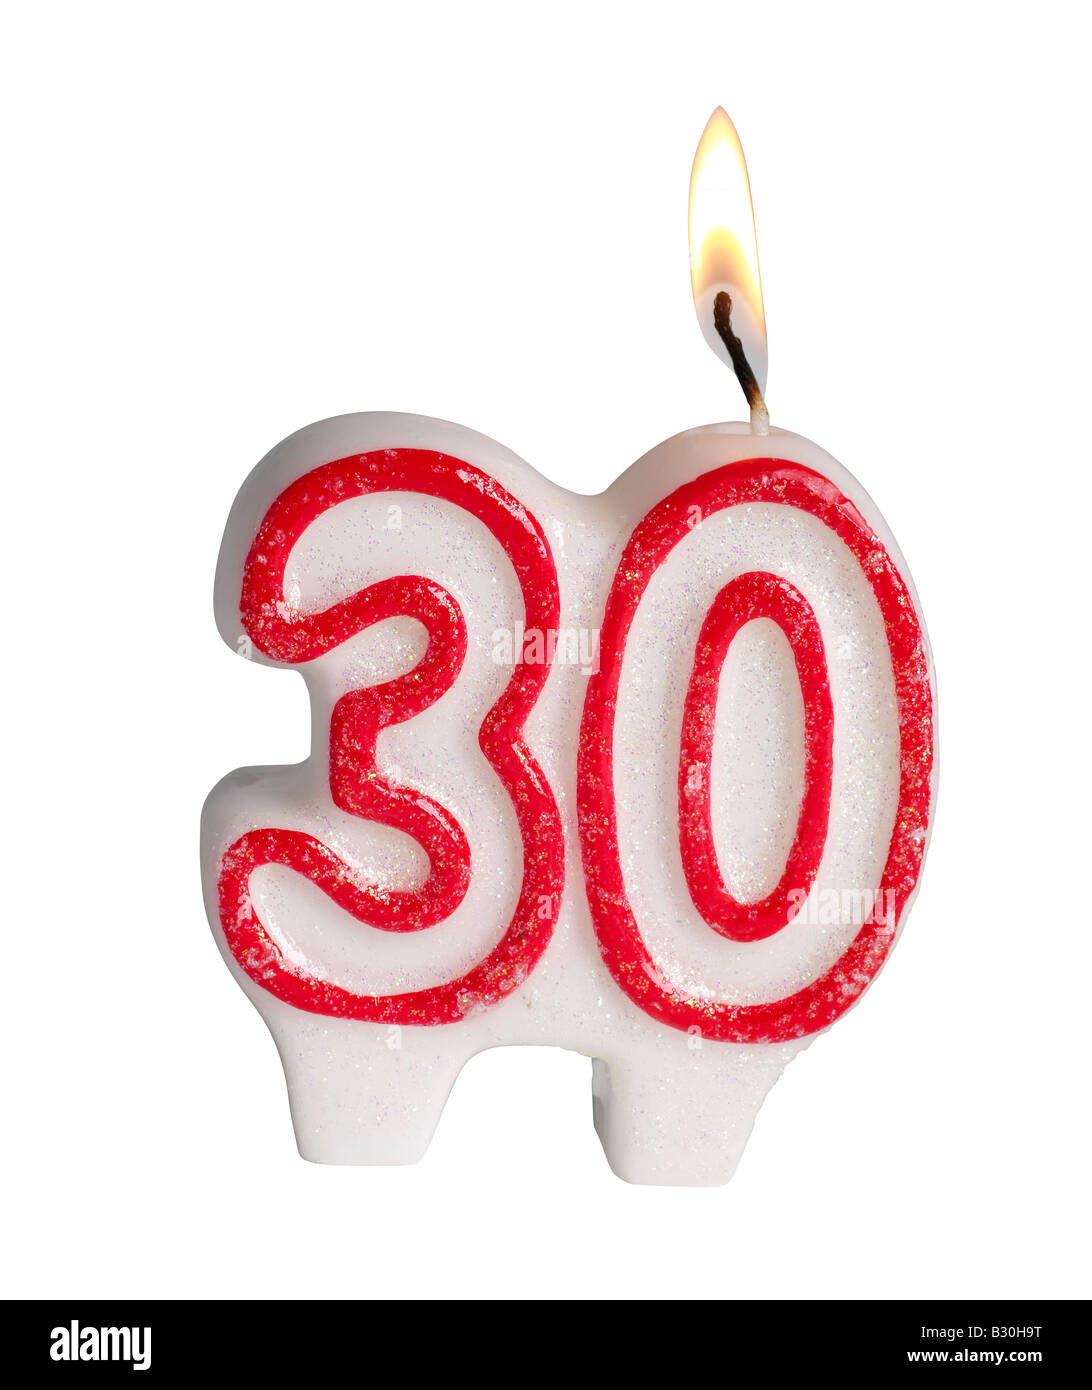 Numero 30 candela Foto stock - Alamy